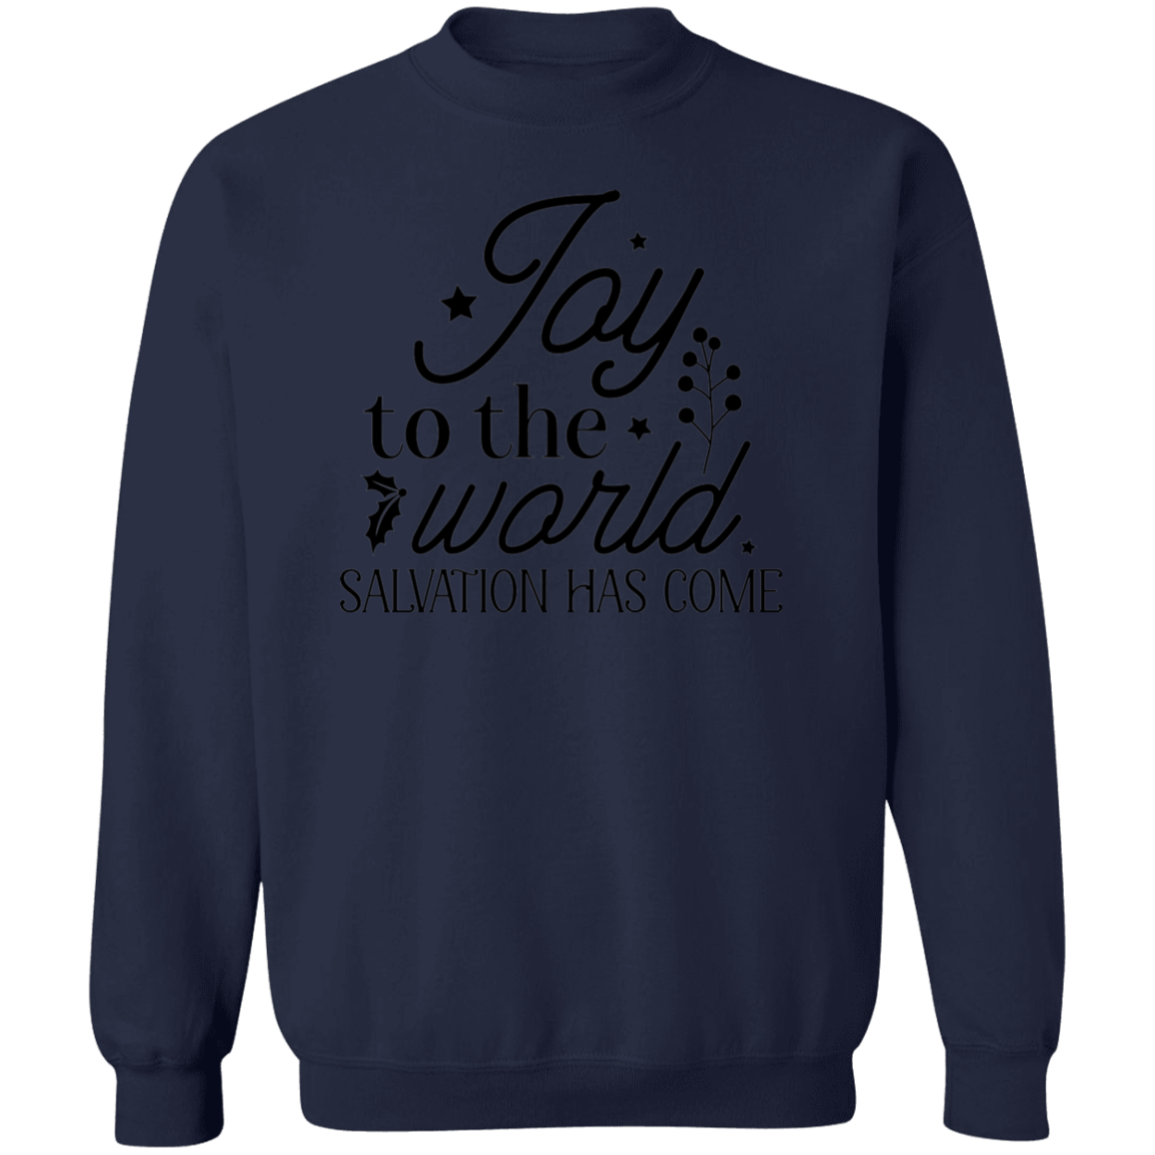 JOY TO THE WORLD SALVATION HAS COME SWEATSHIRT, Christian Christmas sweater, Jesus sweatshirt